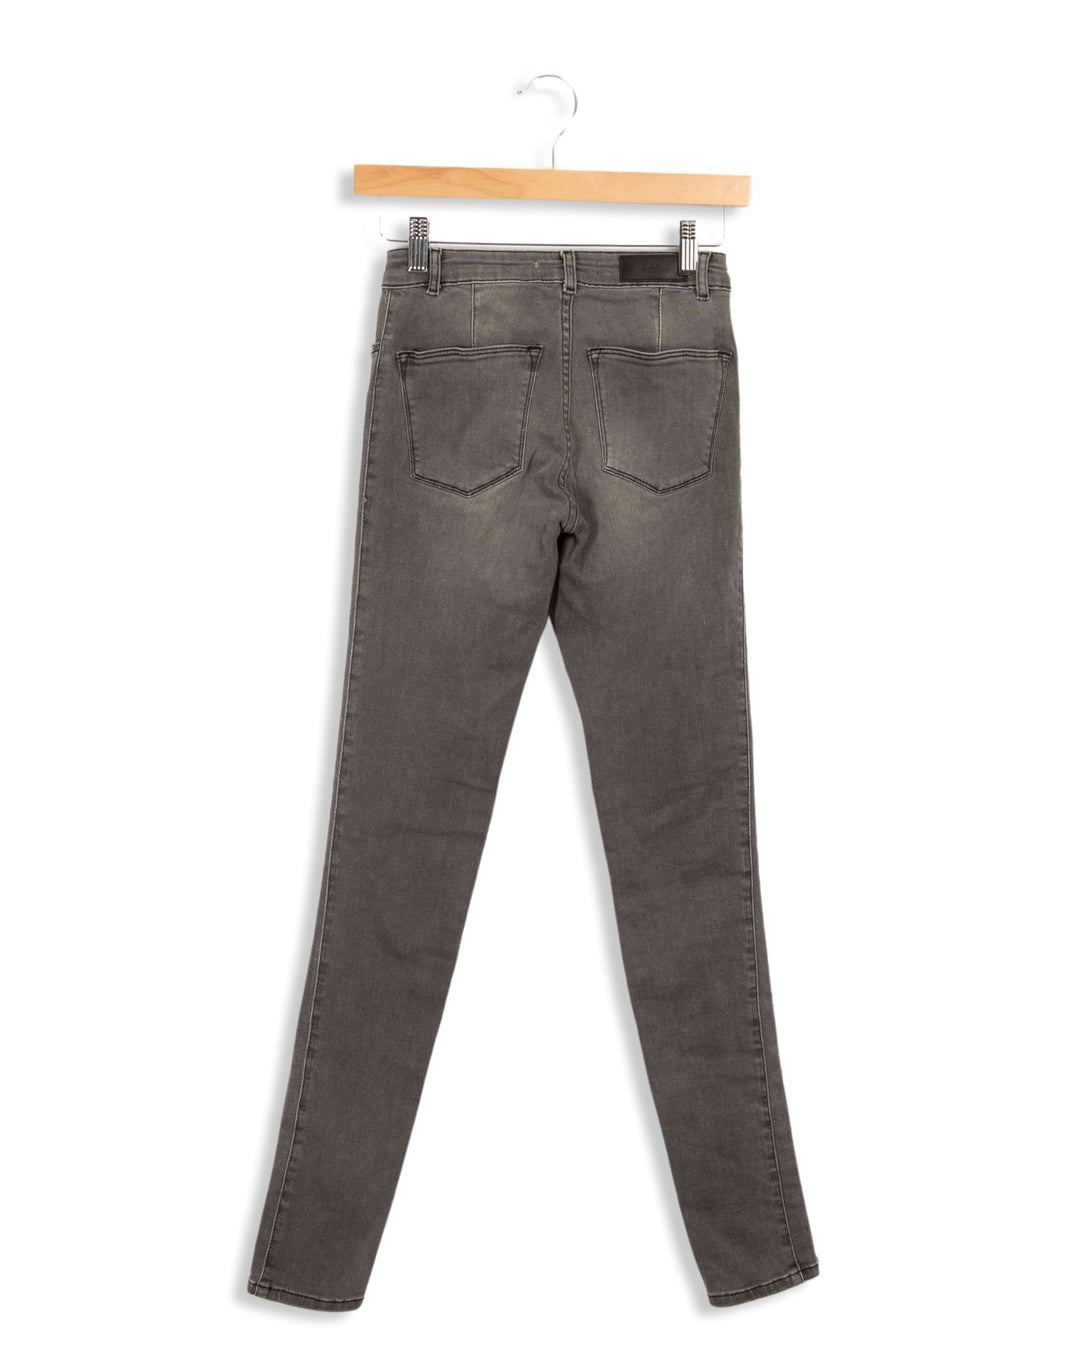 ZAPA gray jeans - [24-25]